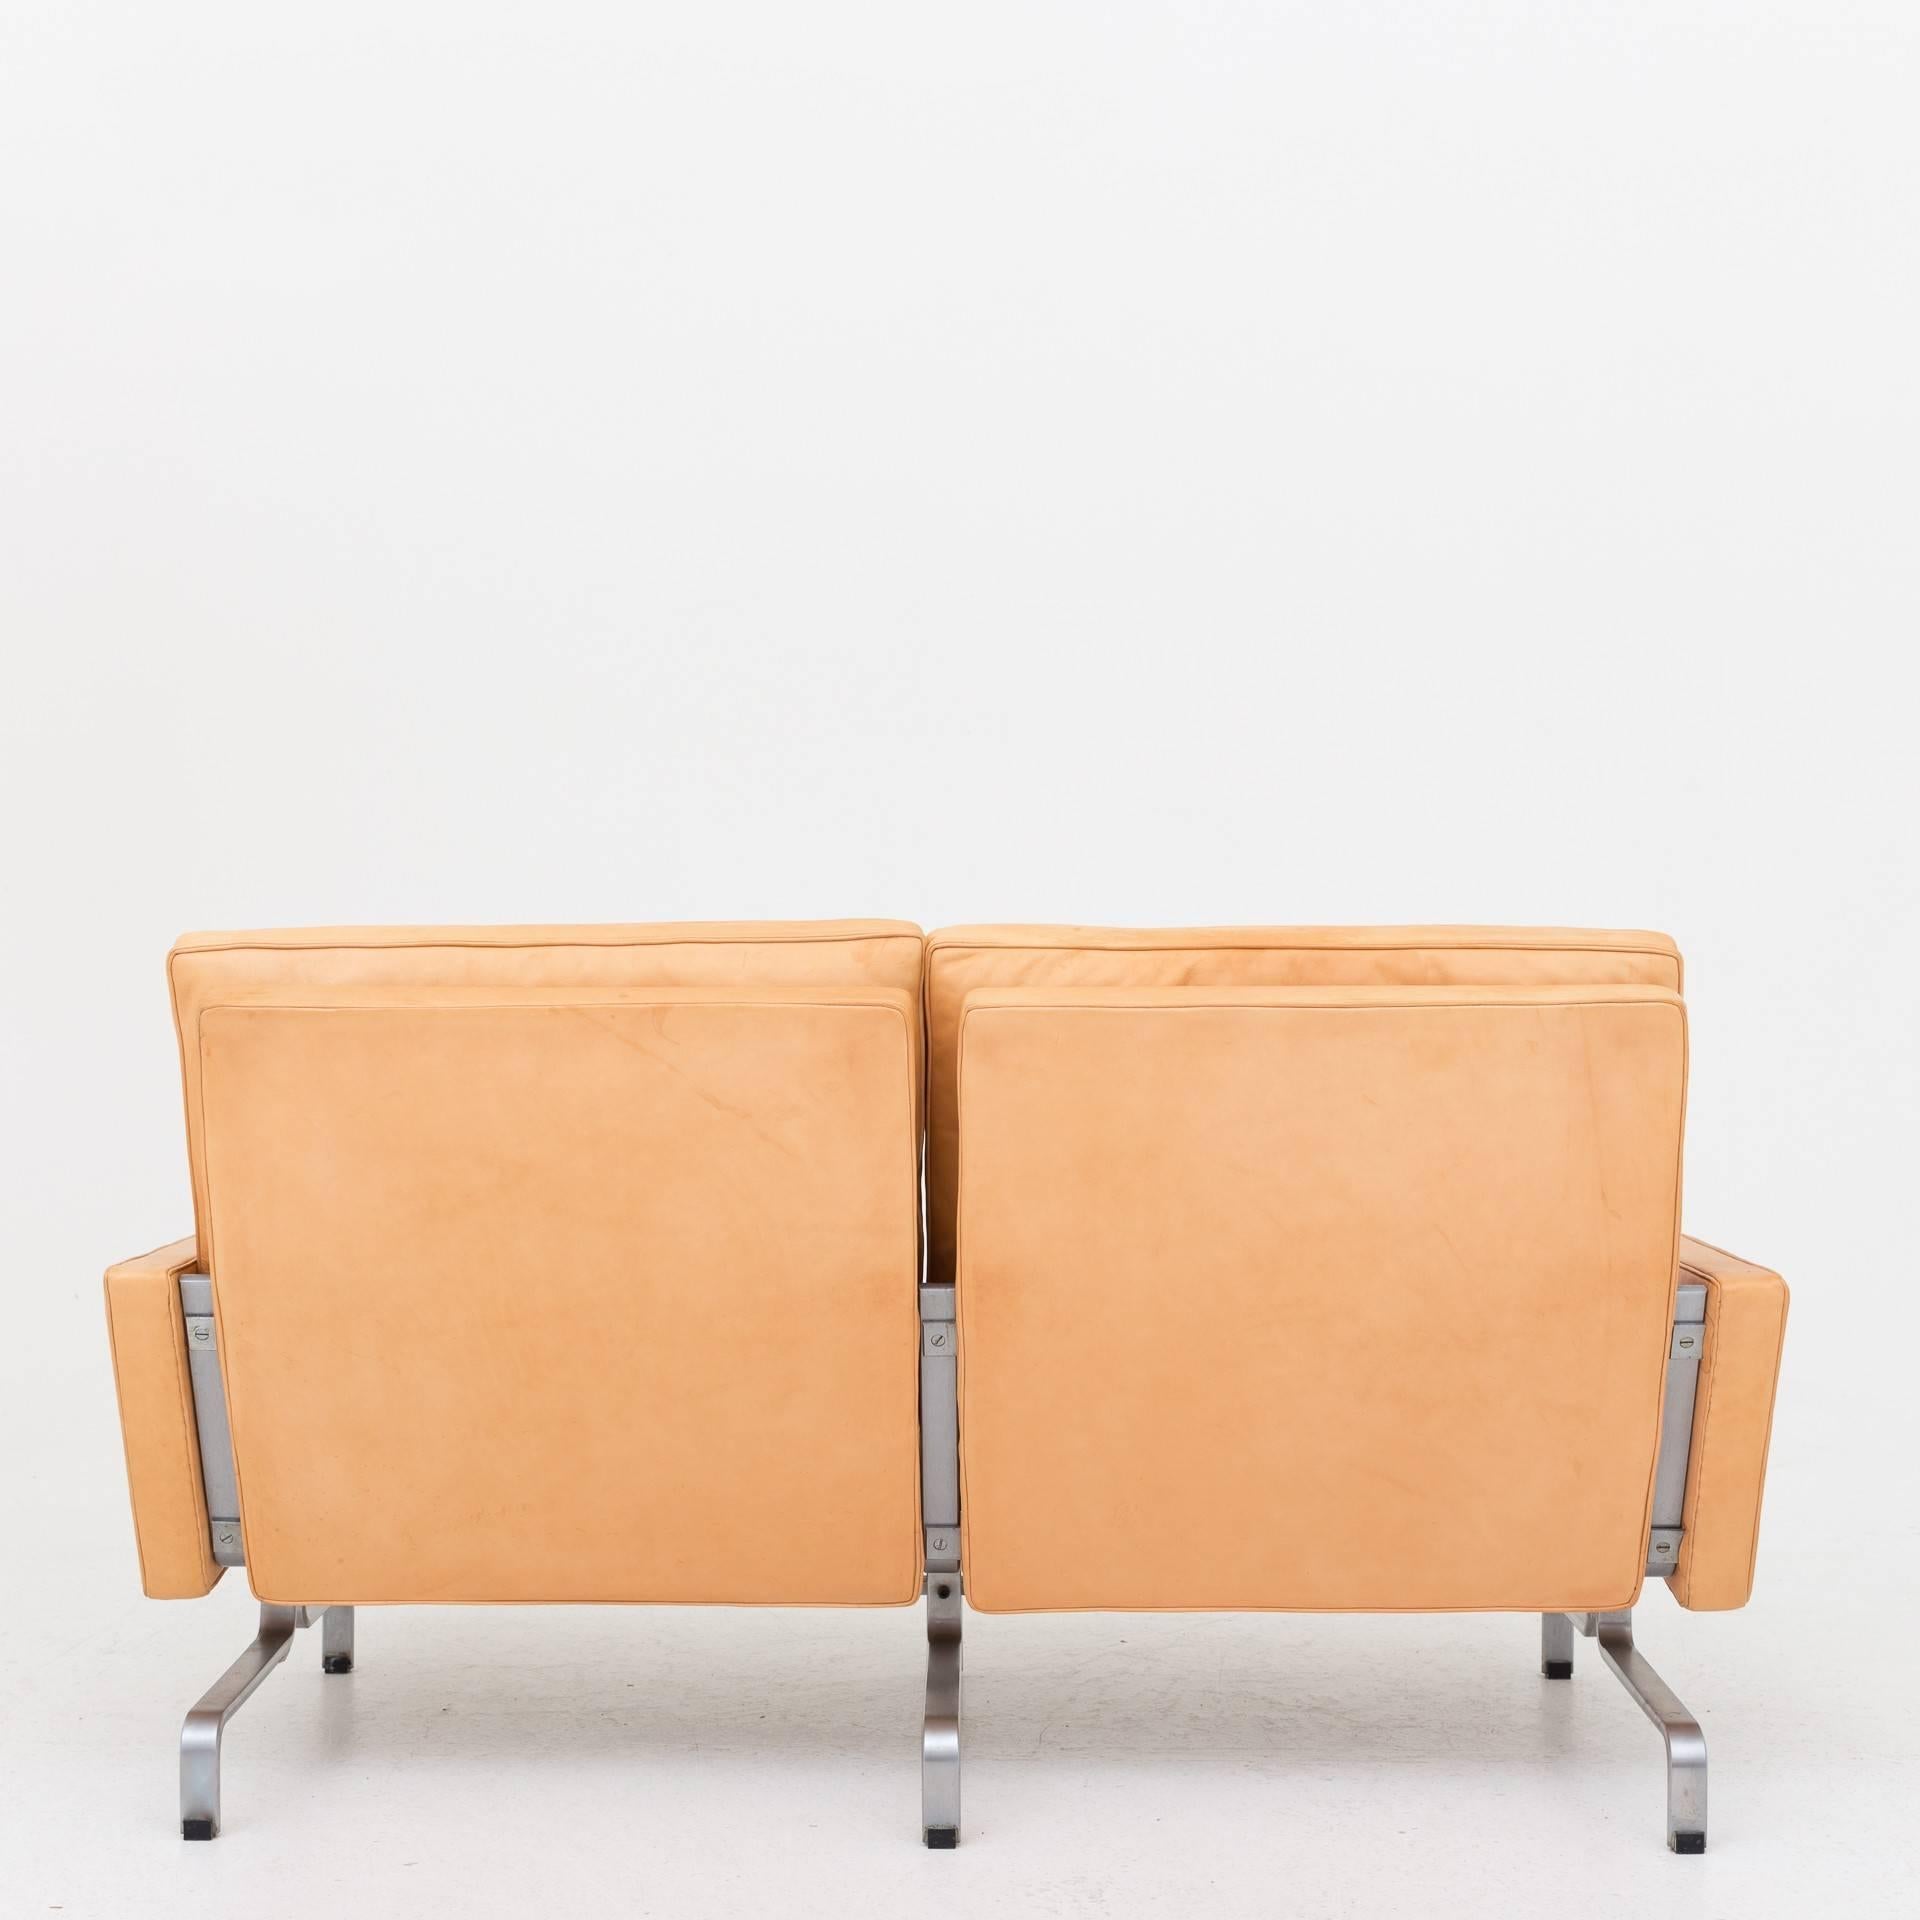 PK 31/2, two-seat sofa in natural leather and frame in chromed steel. Maker E. Kold Christensen.